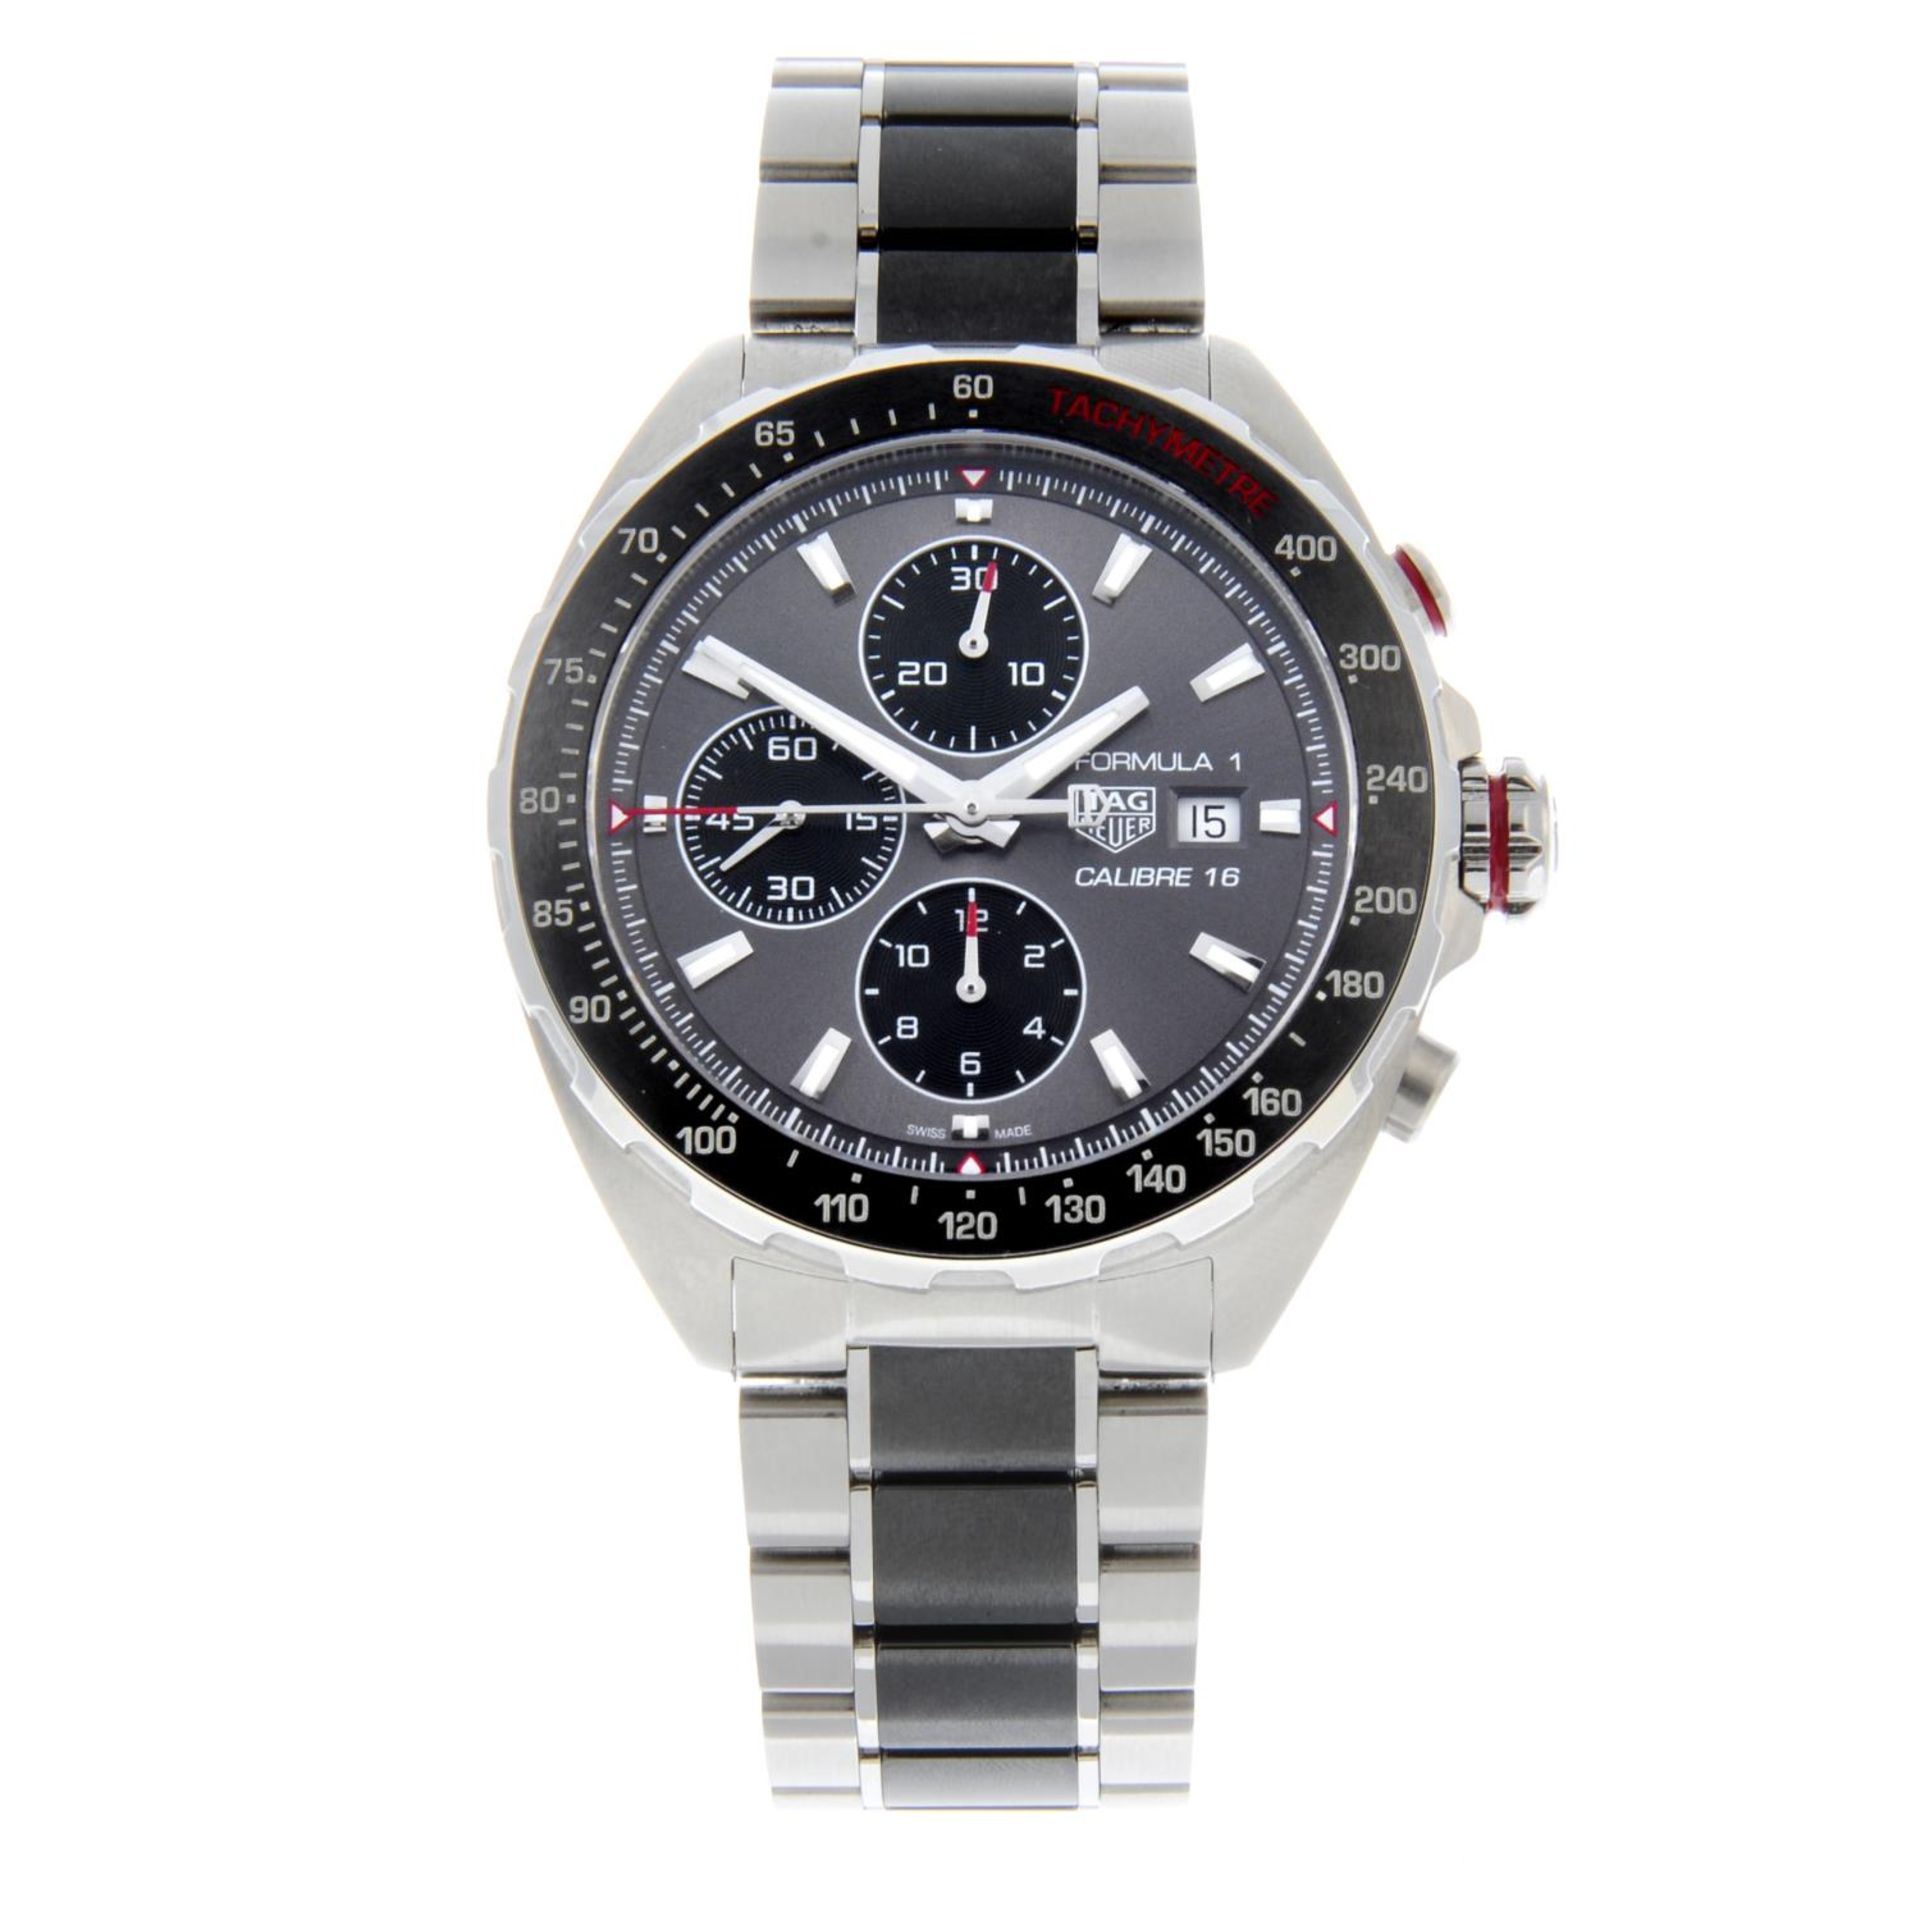 TAG HEUER - a Formula 1 chronographbracelet watch.